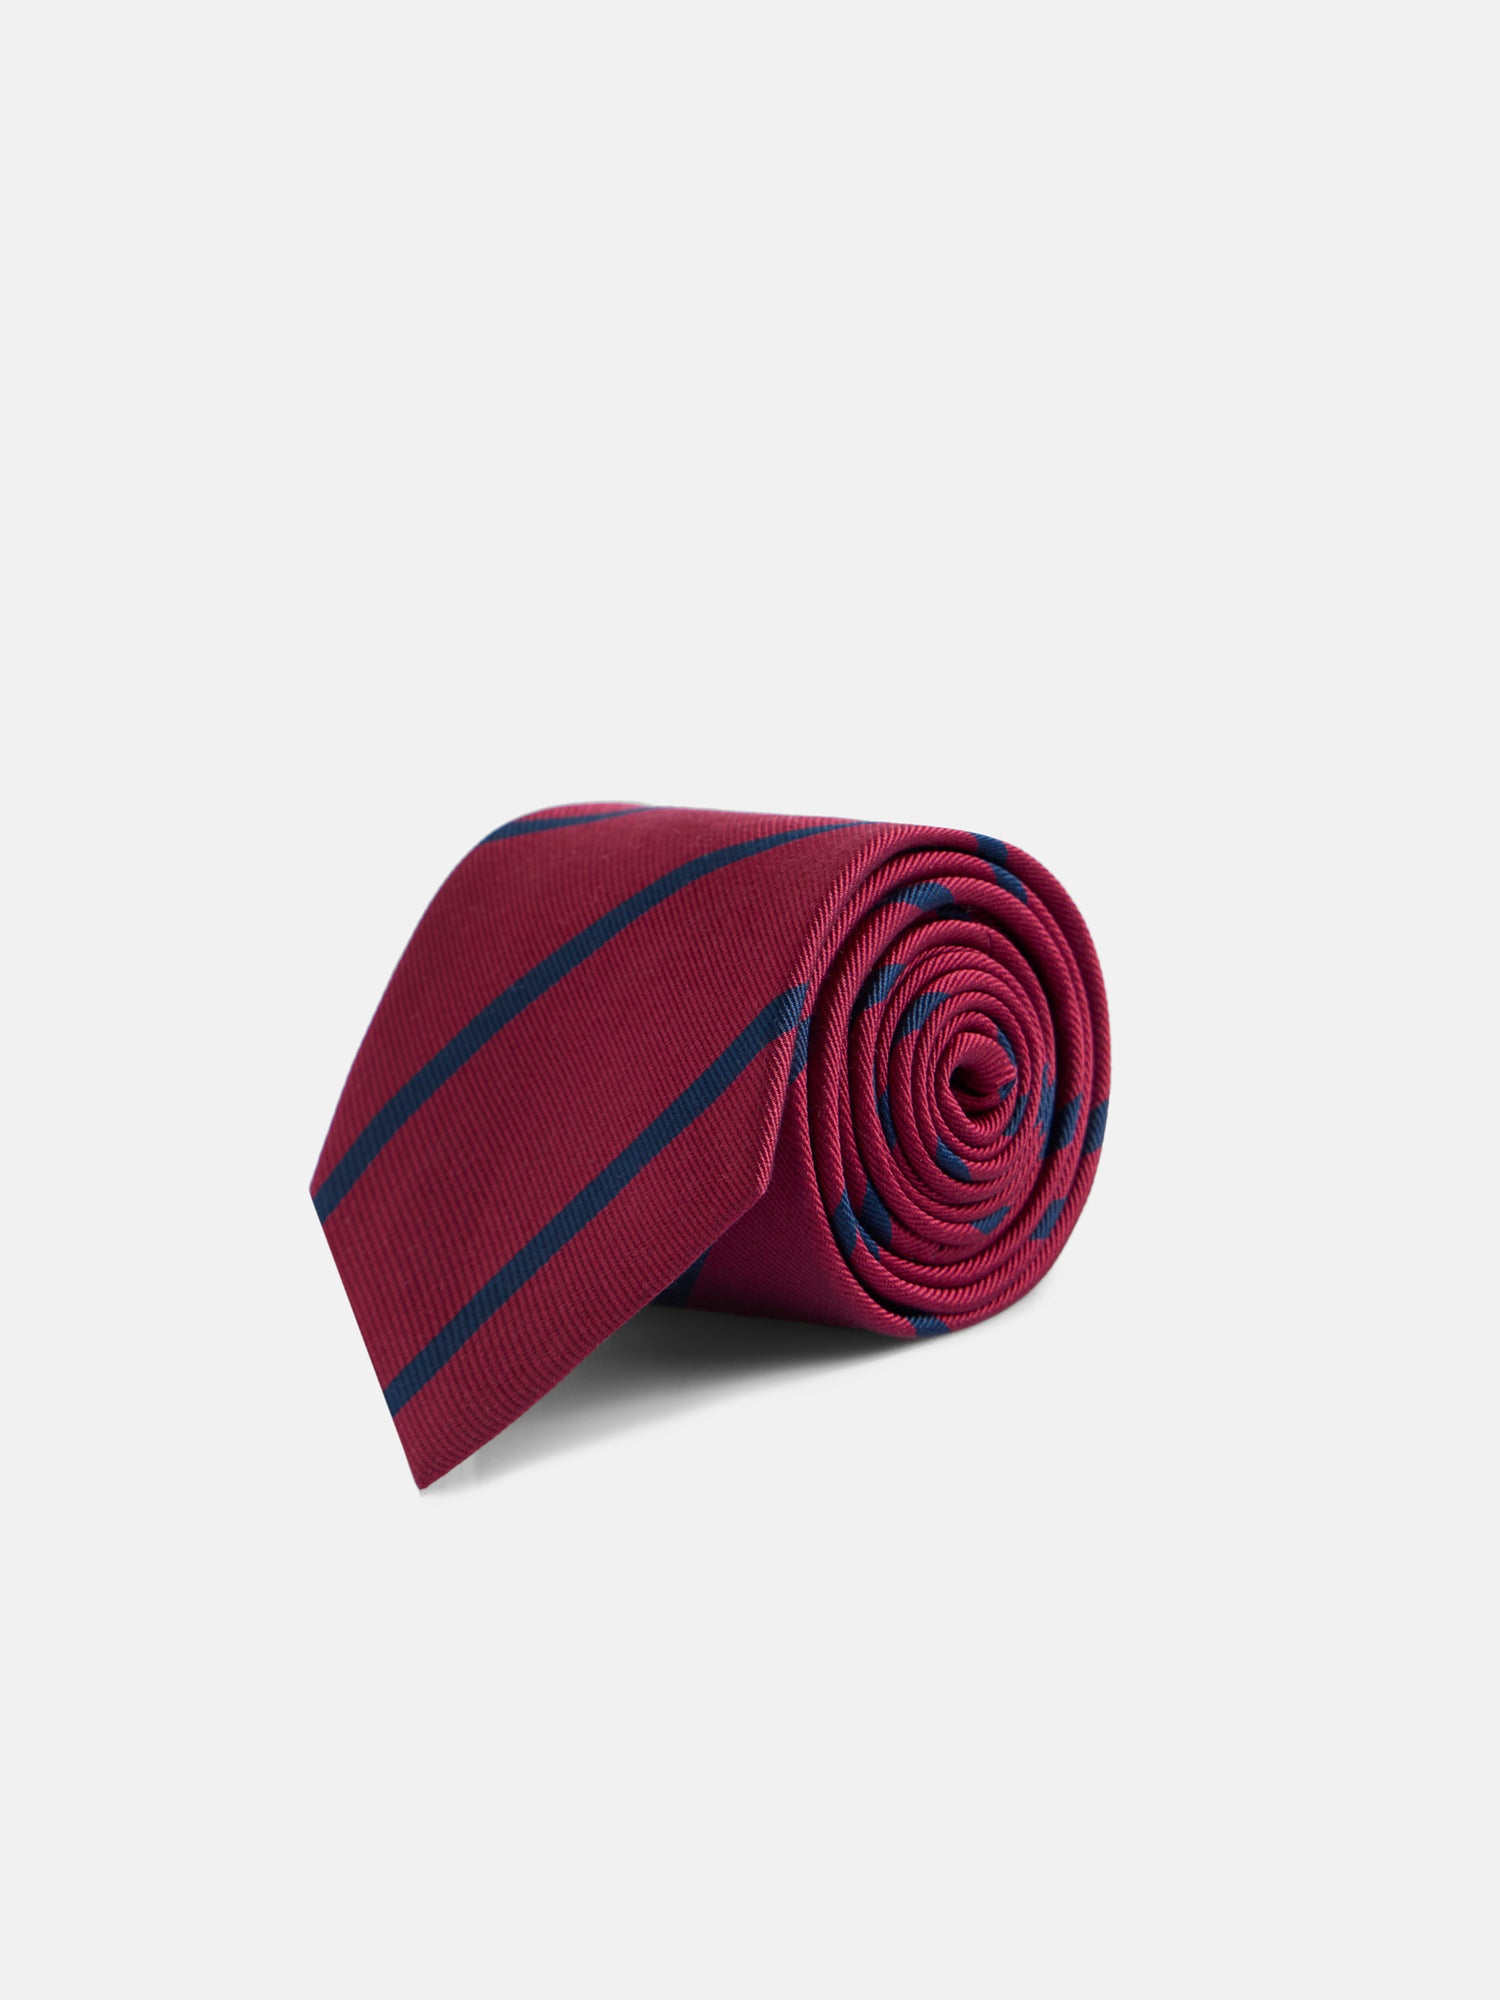 Burgundy striped tie